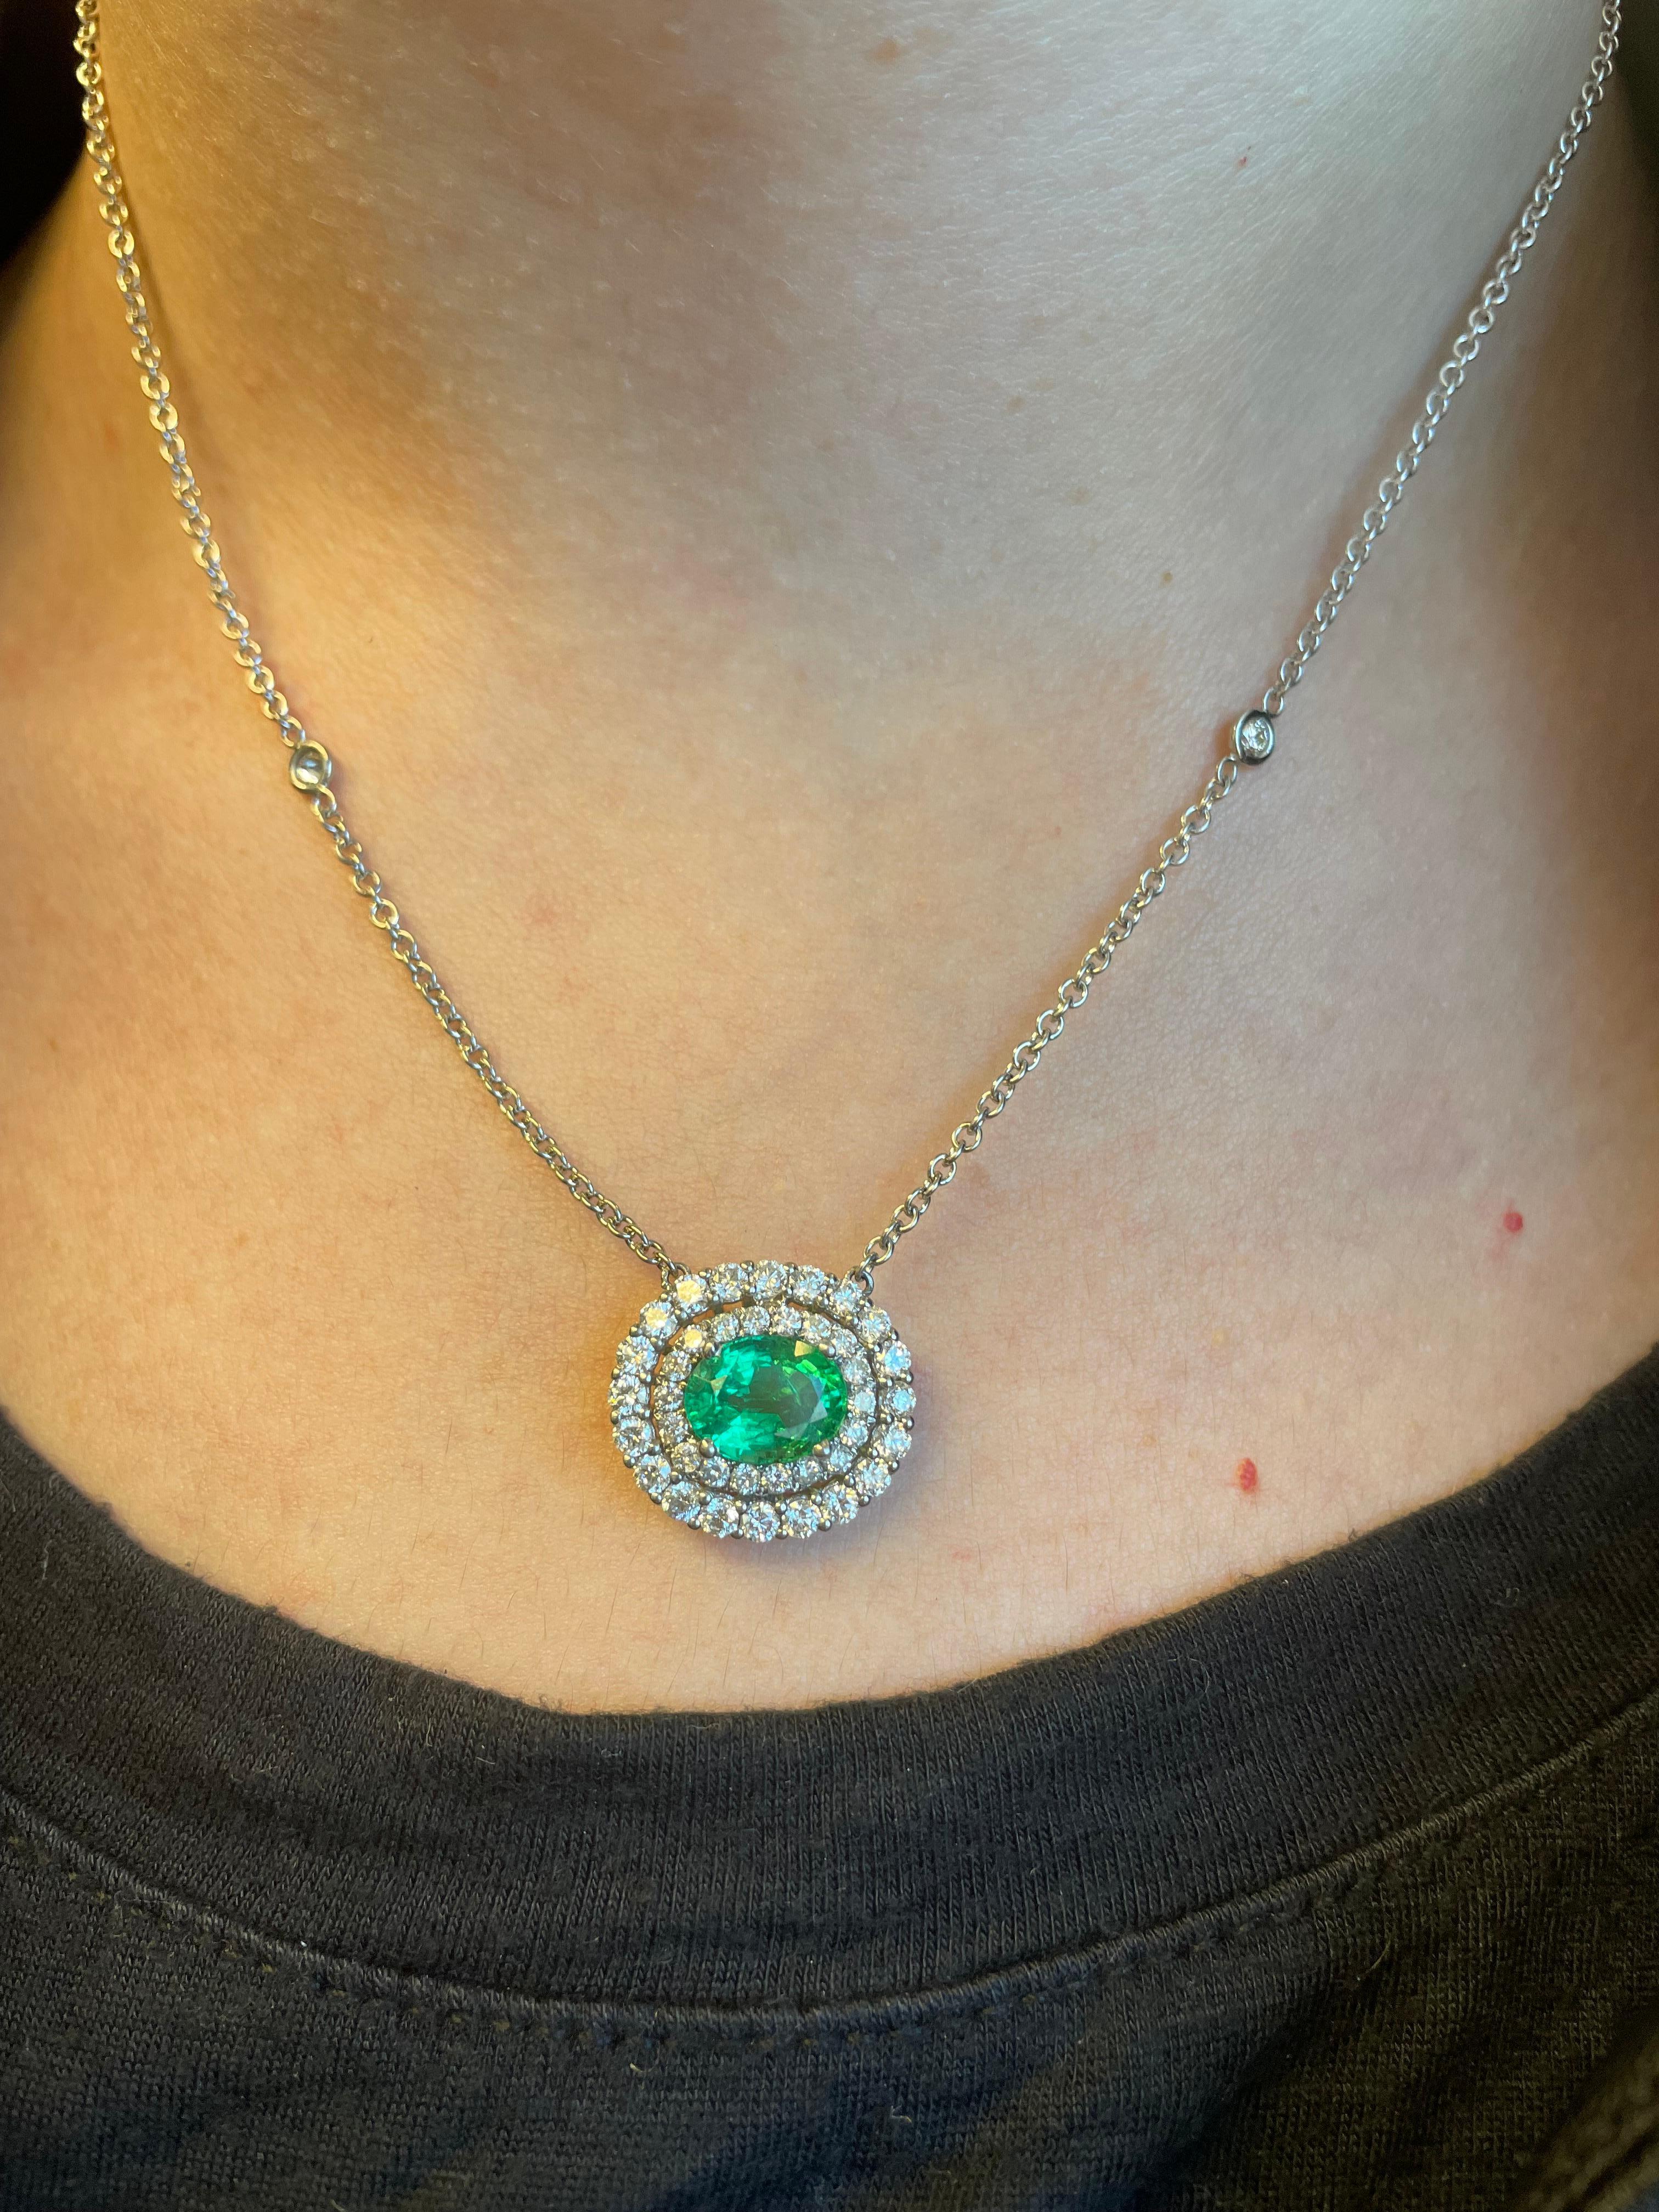 Stunning emerald pendant 